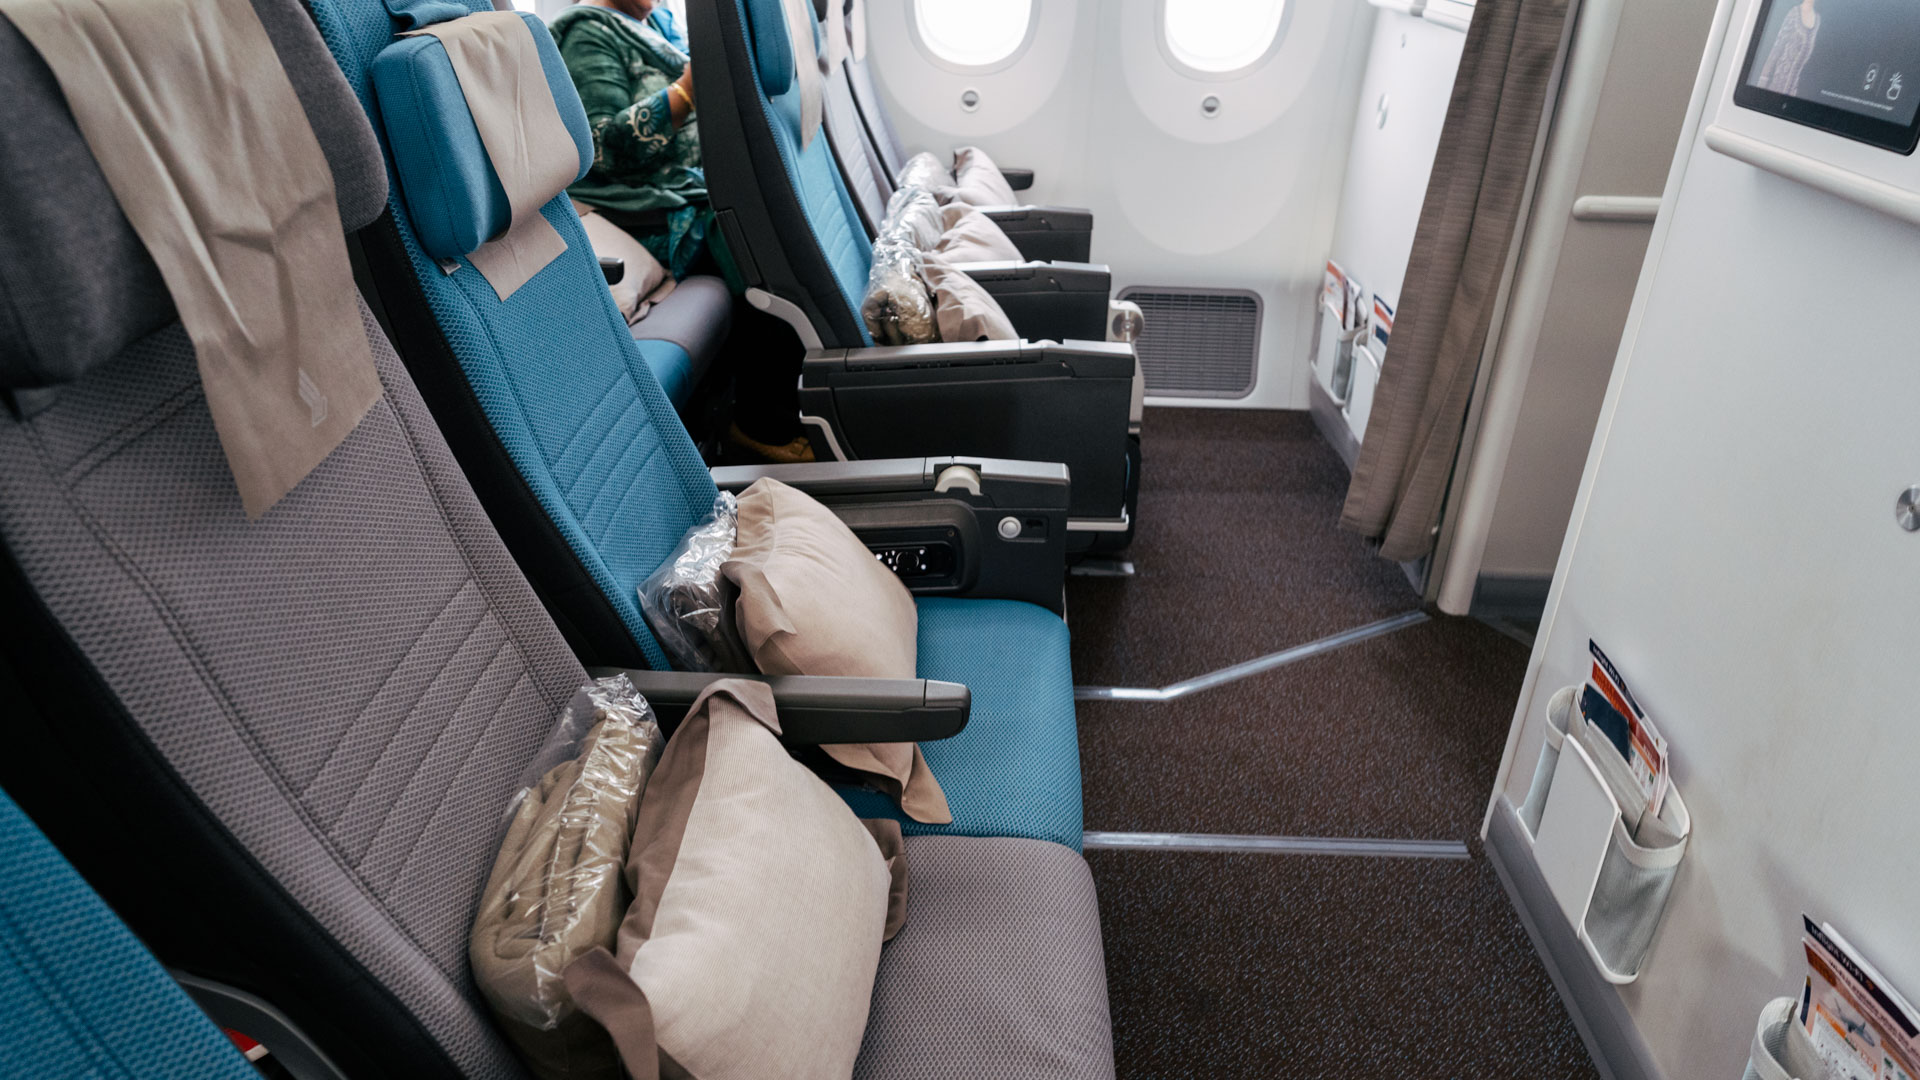 Singapore Airlines Boeing 787 Economy bulkhead seat